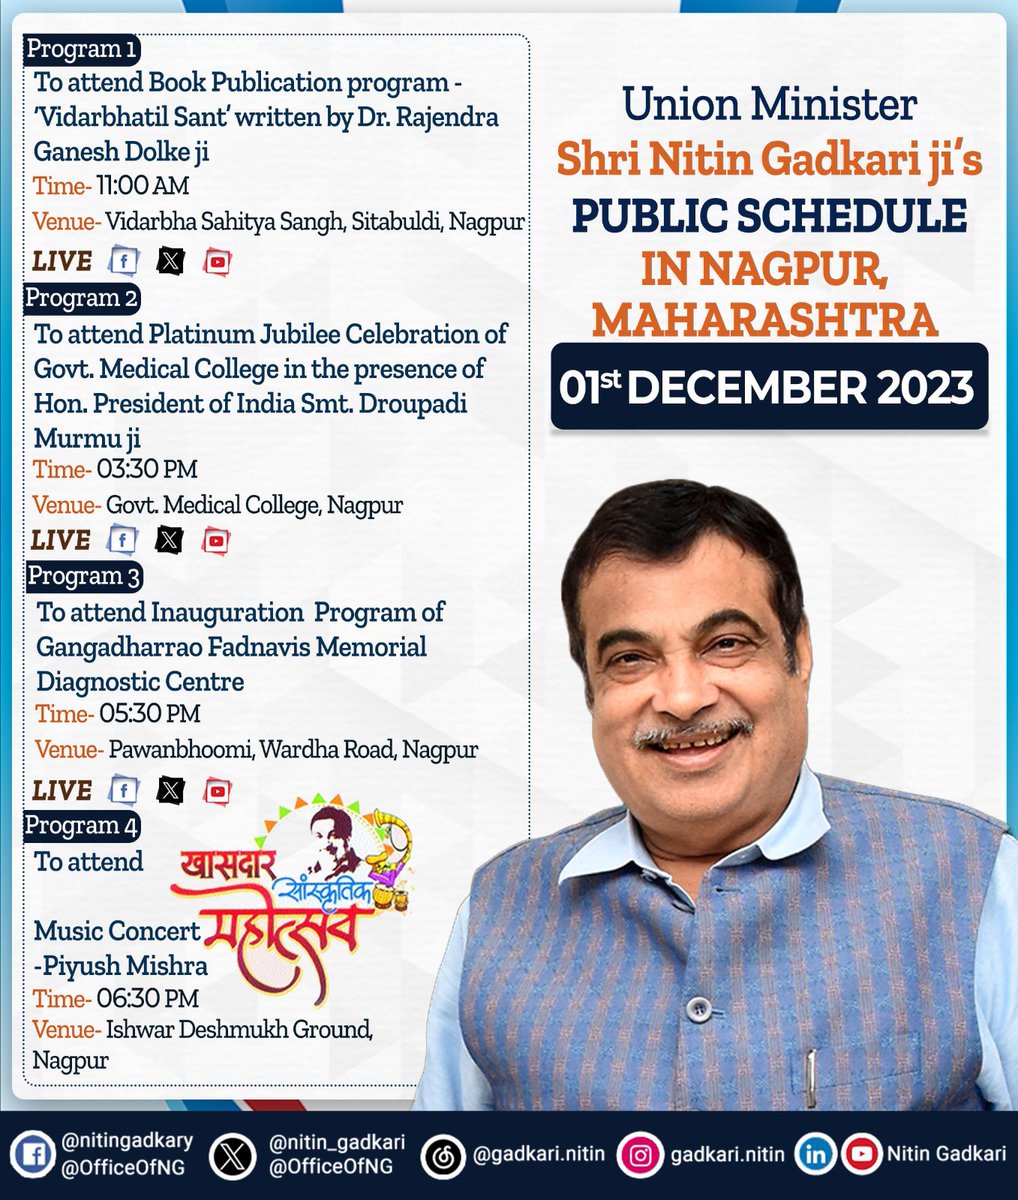 Union Minister Shri @nitin_gadkari Ji's public schedule for 1st December 2023.